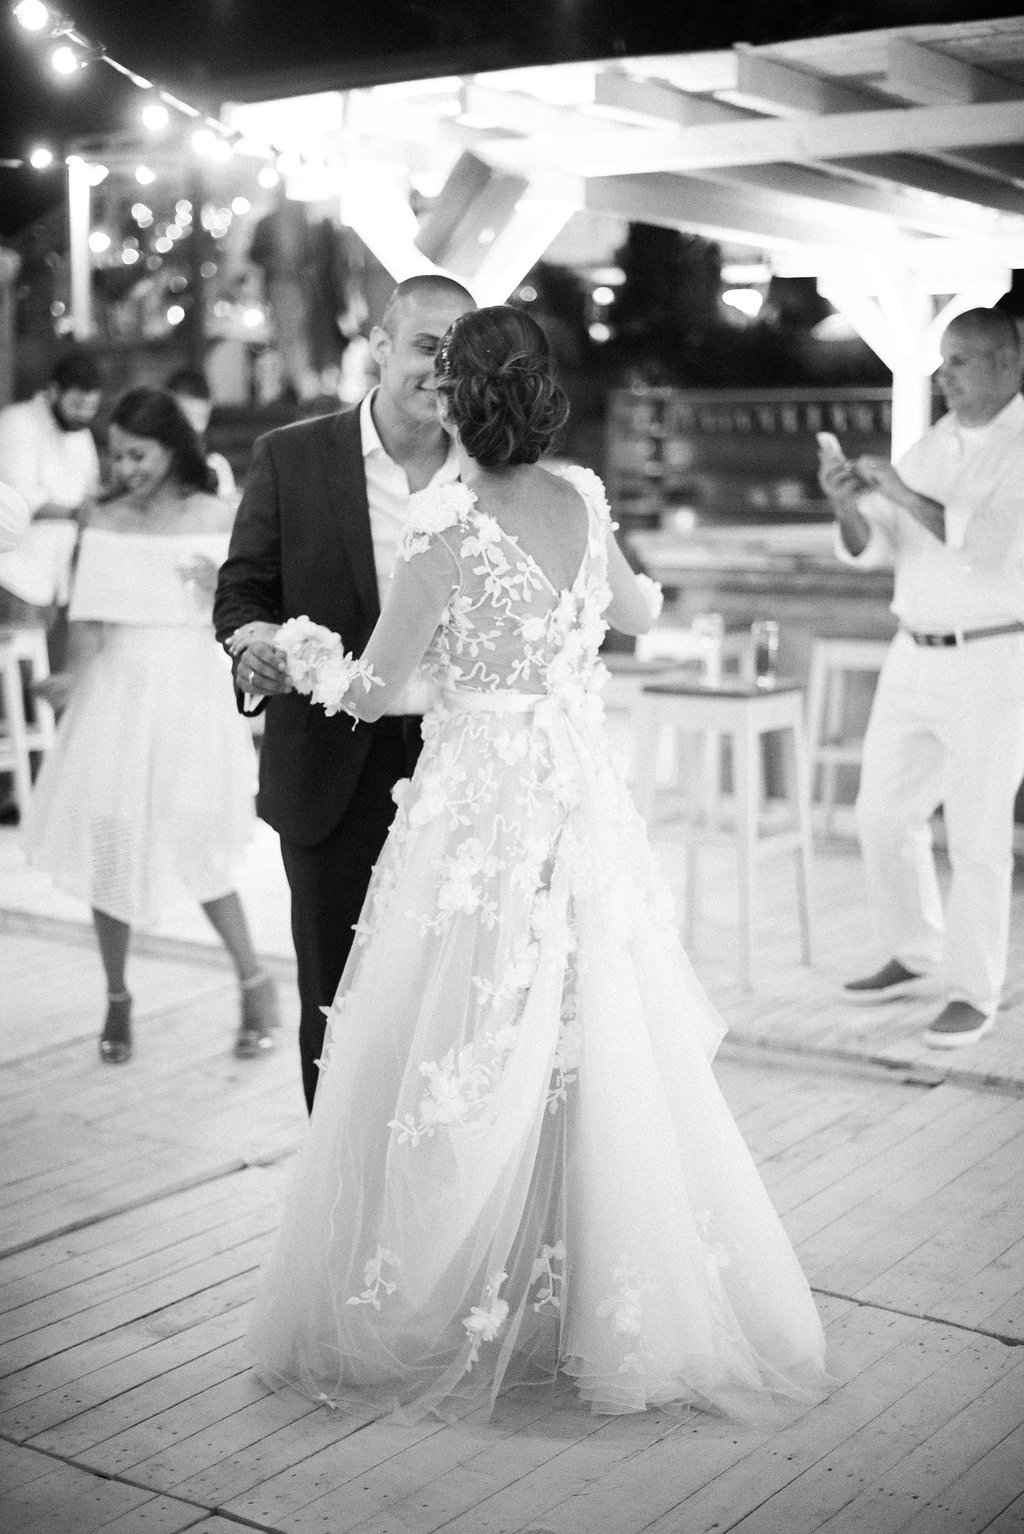 Daphne and Mike - Ethereal Paros wedding - Greece wedding photographers Les Anagnou